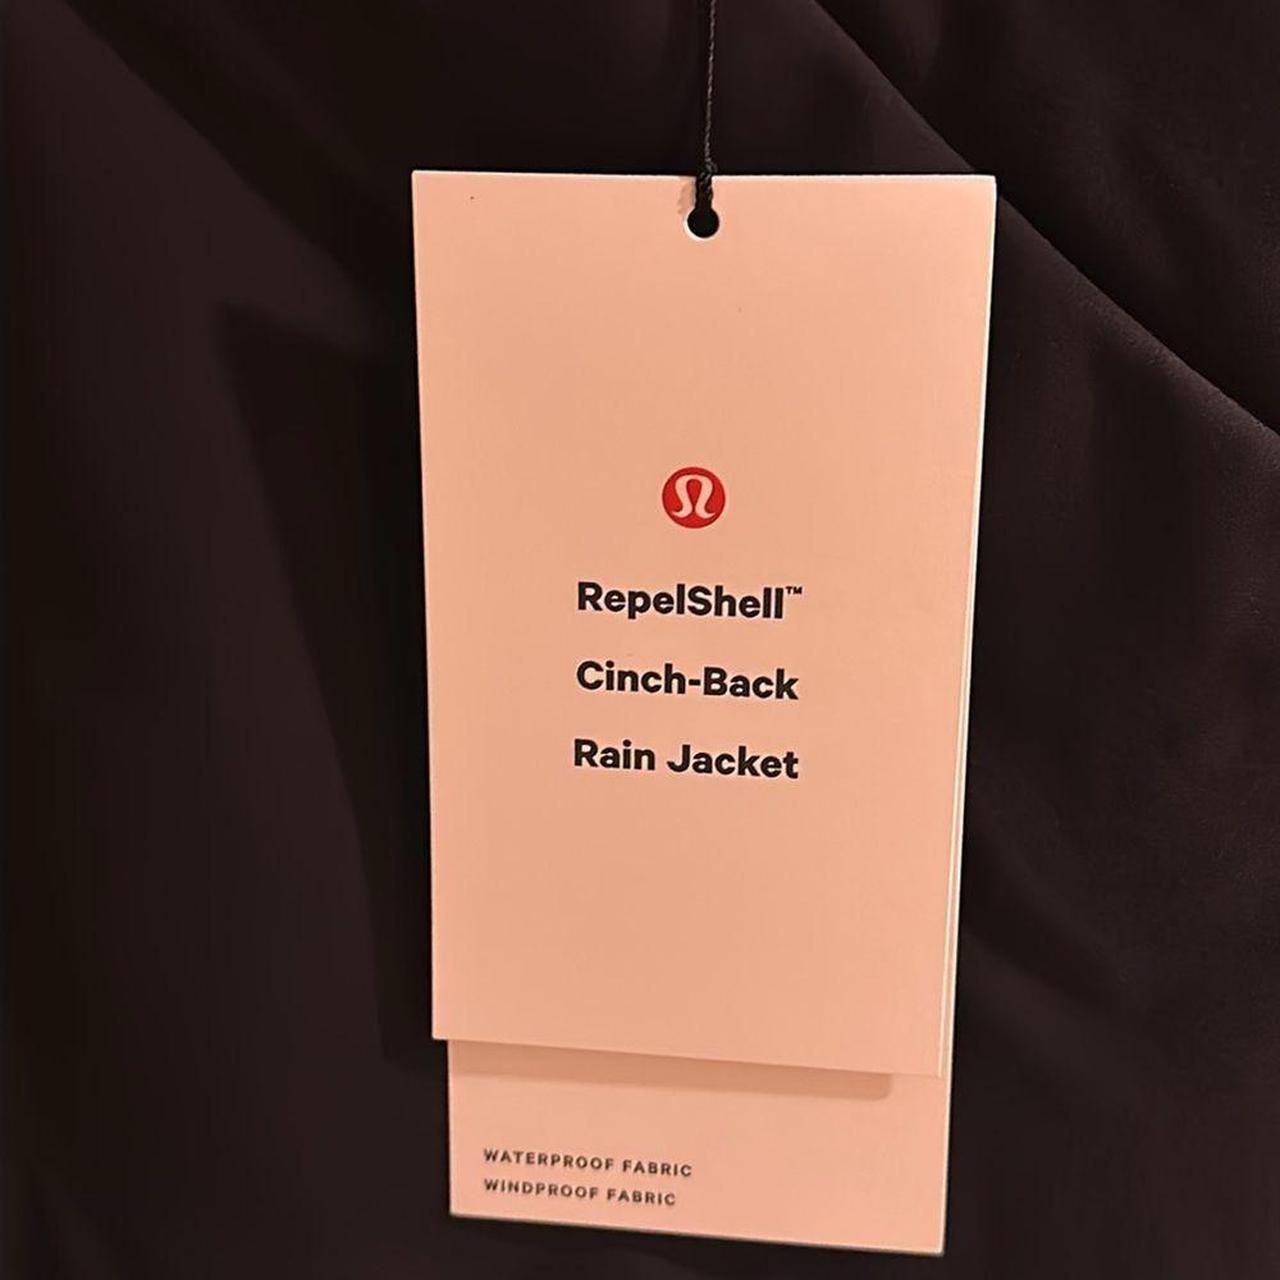 Lululemon RepelShell Cinch-Back Rain Jacket Black - Depop